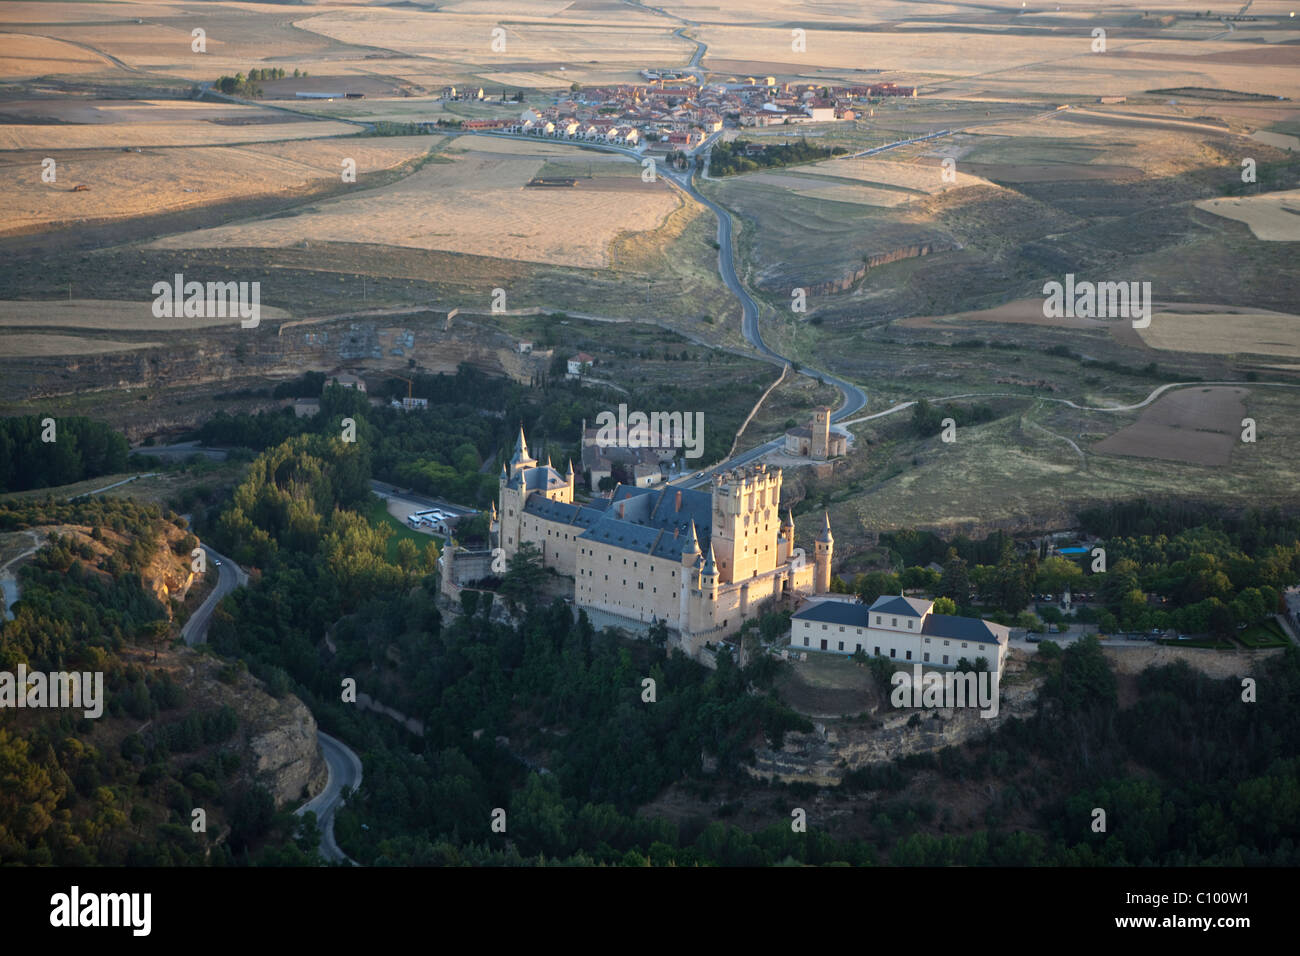 Vue aérienne de El Alcazar de Segovia (Espagne) Banque D'Images